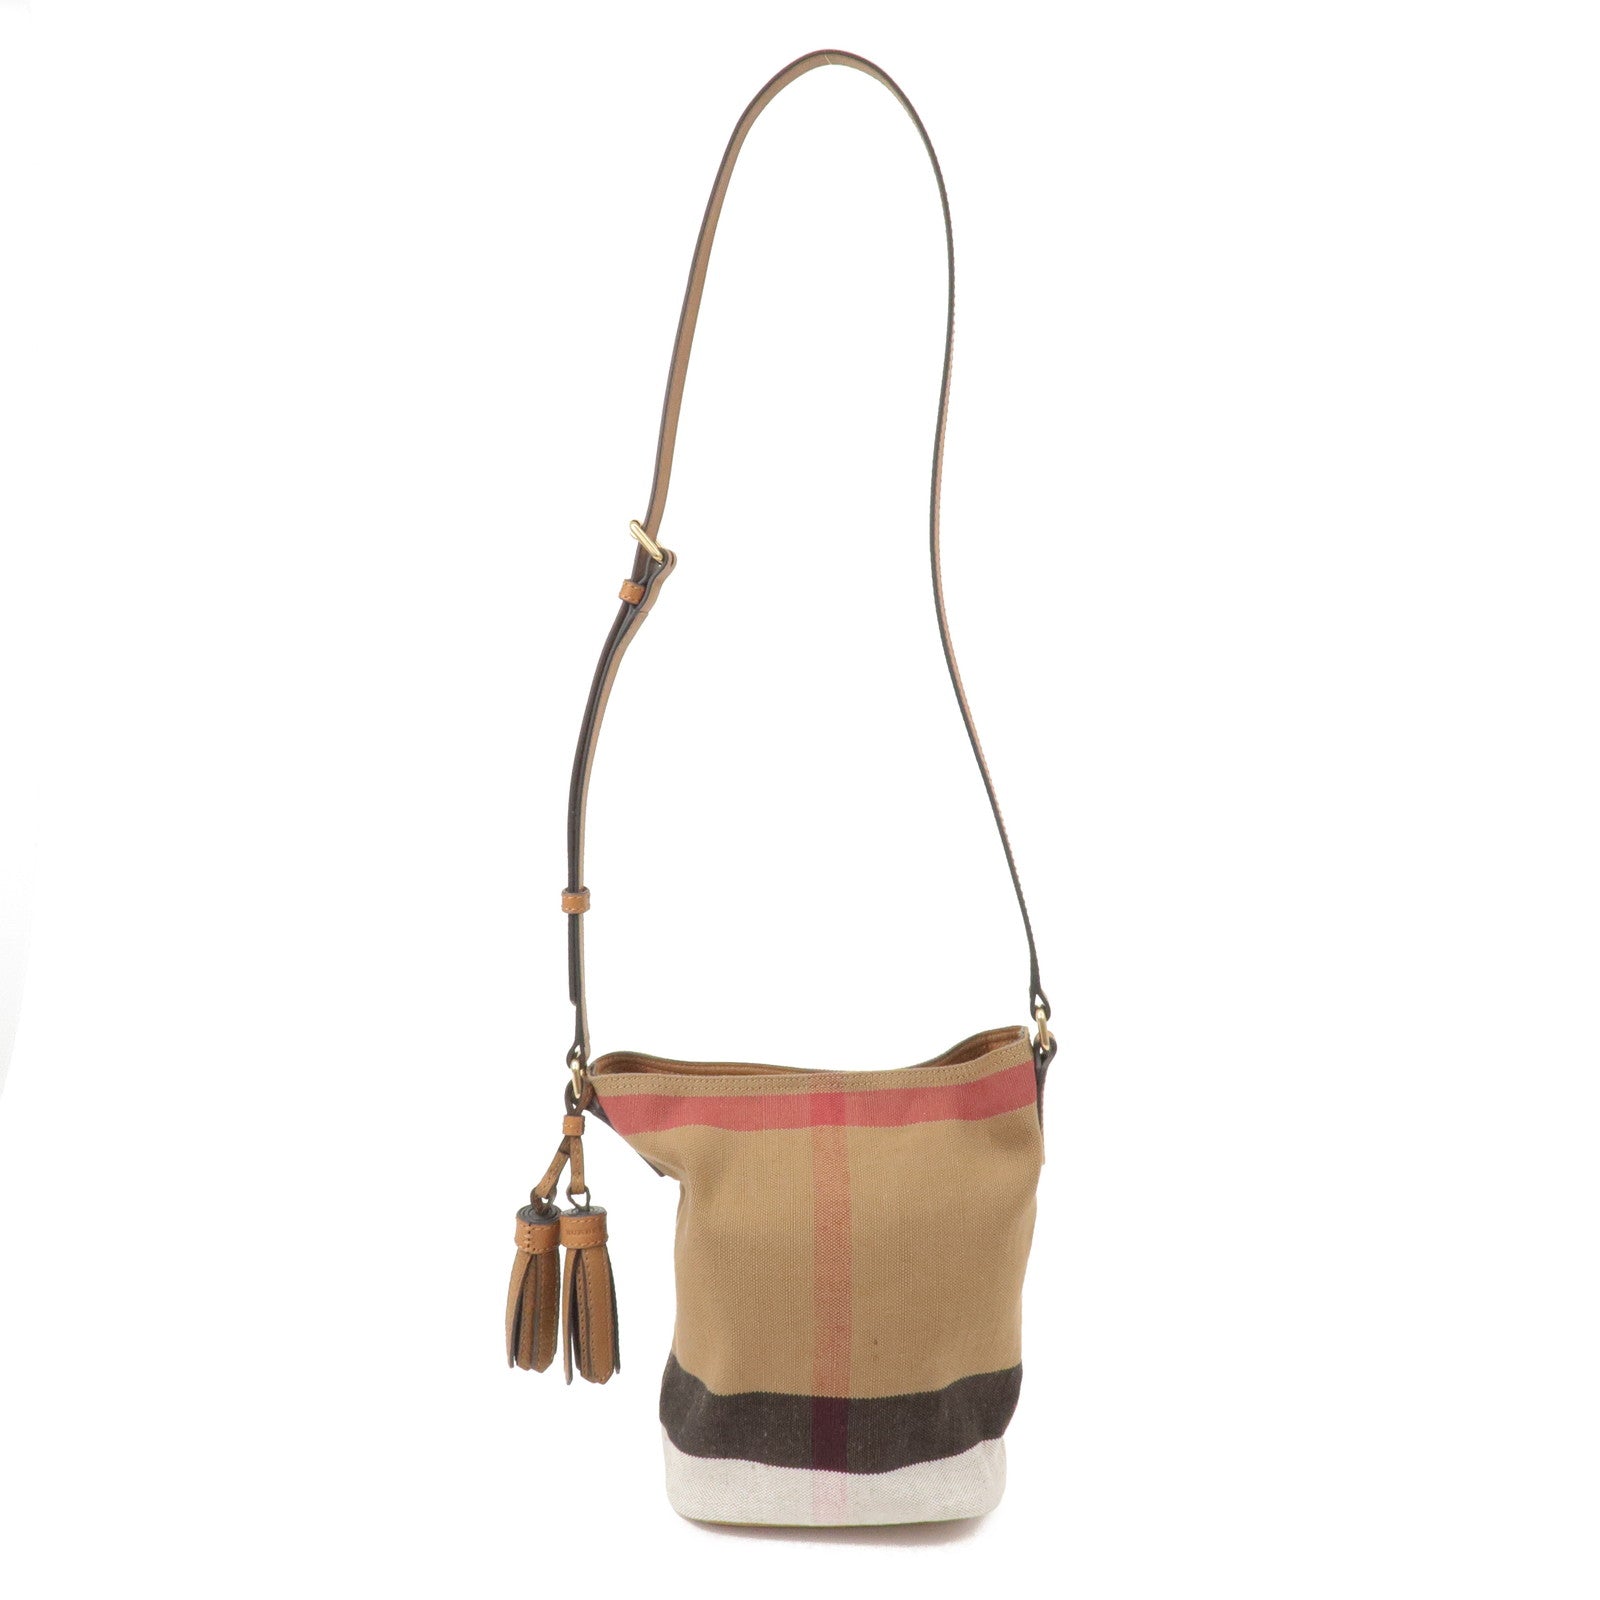 Authentic Burberry Multi Color Shoulder Bag / Hand Bag NEW 